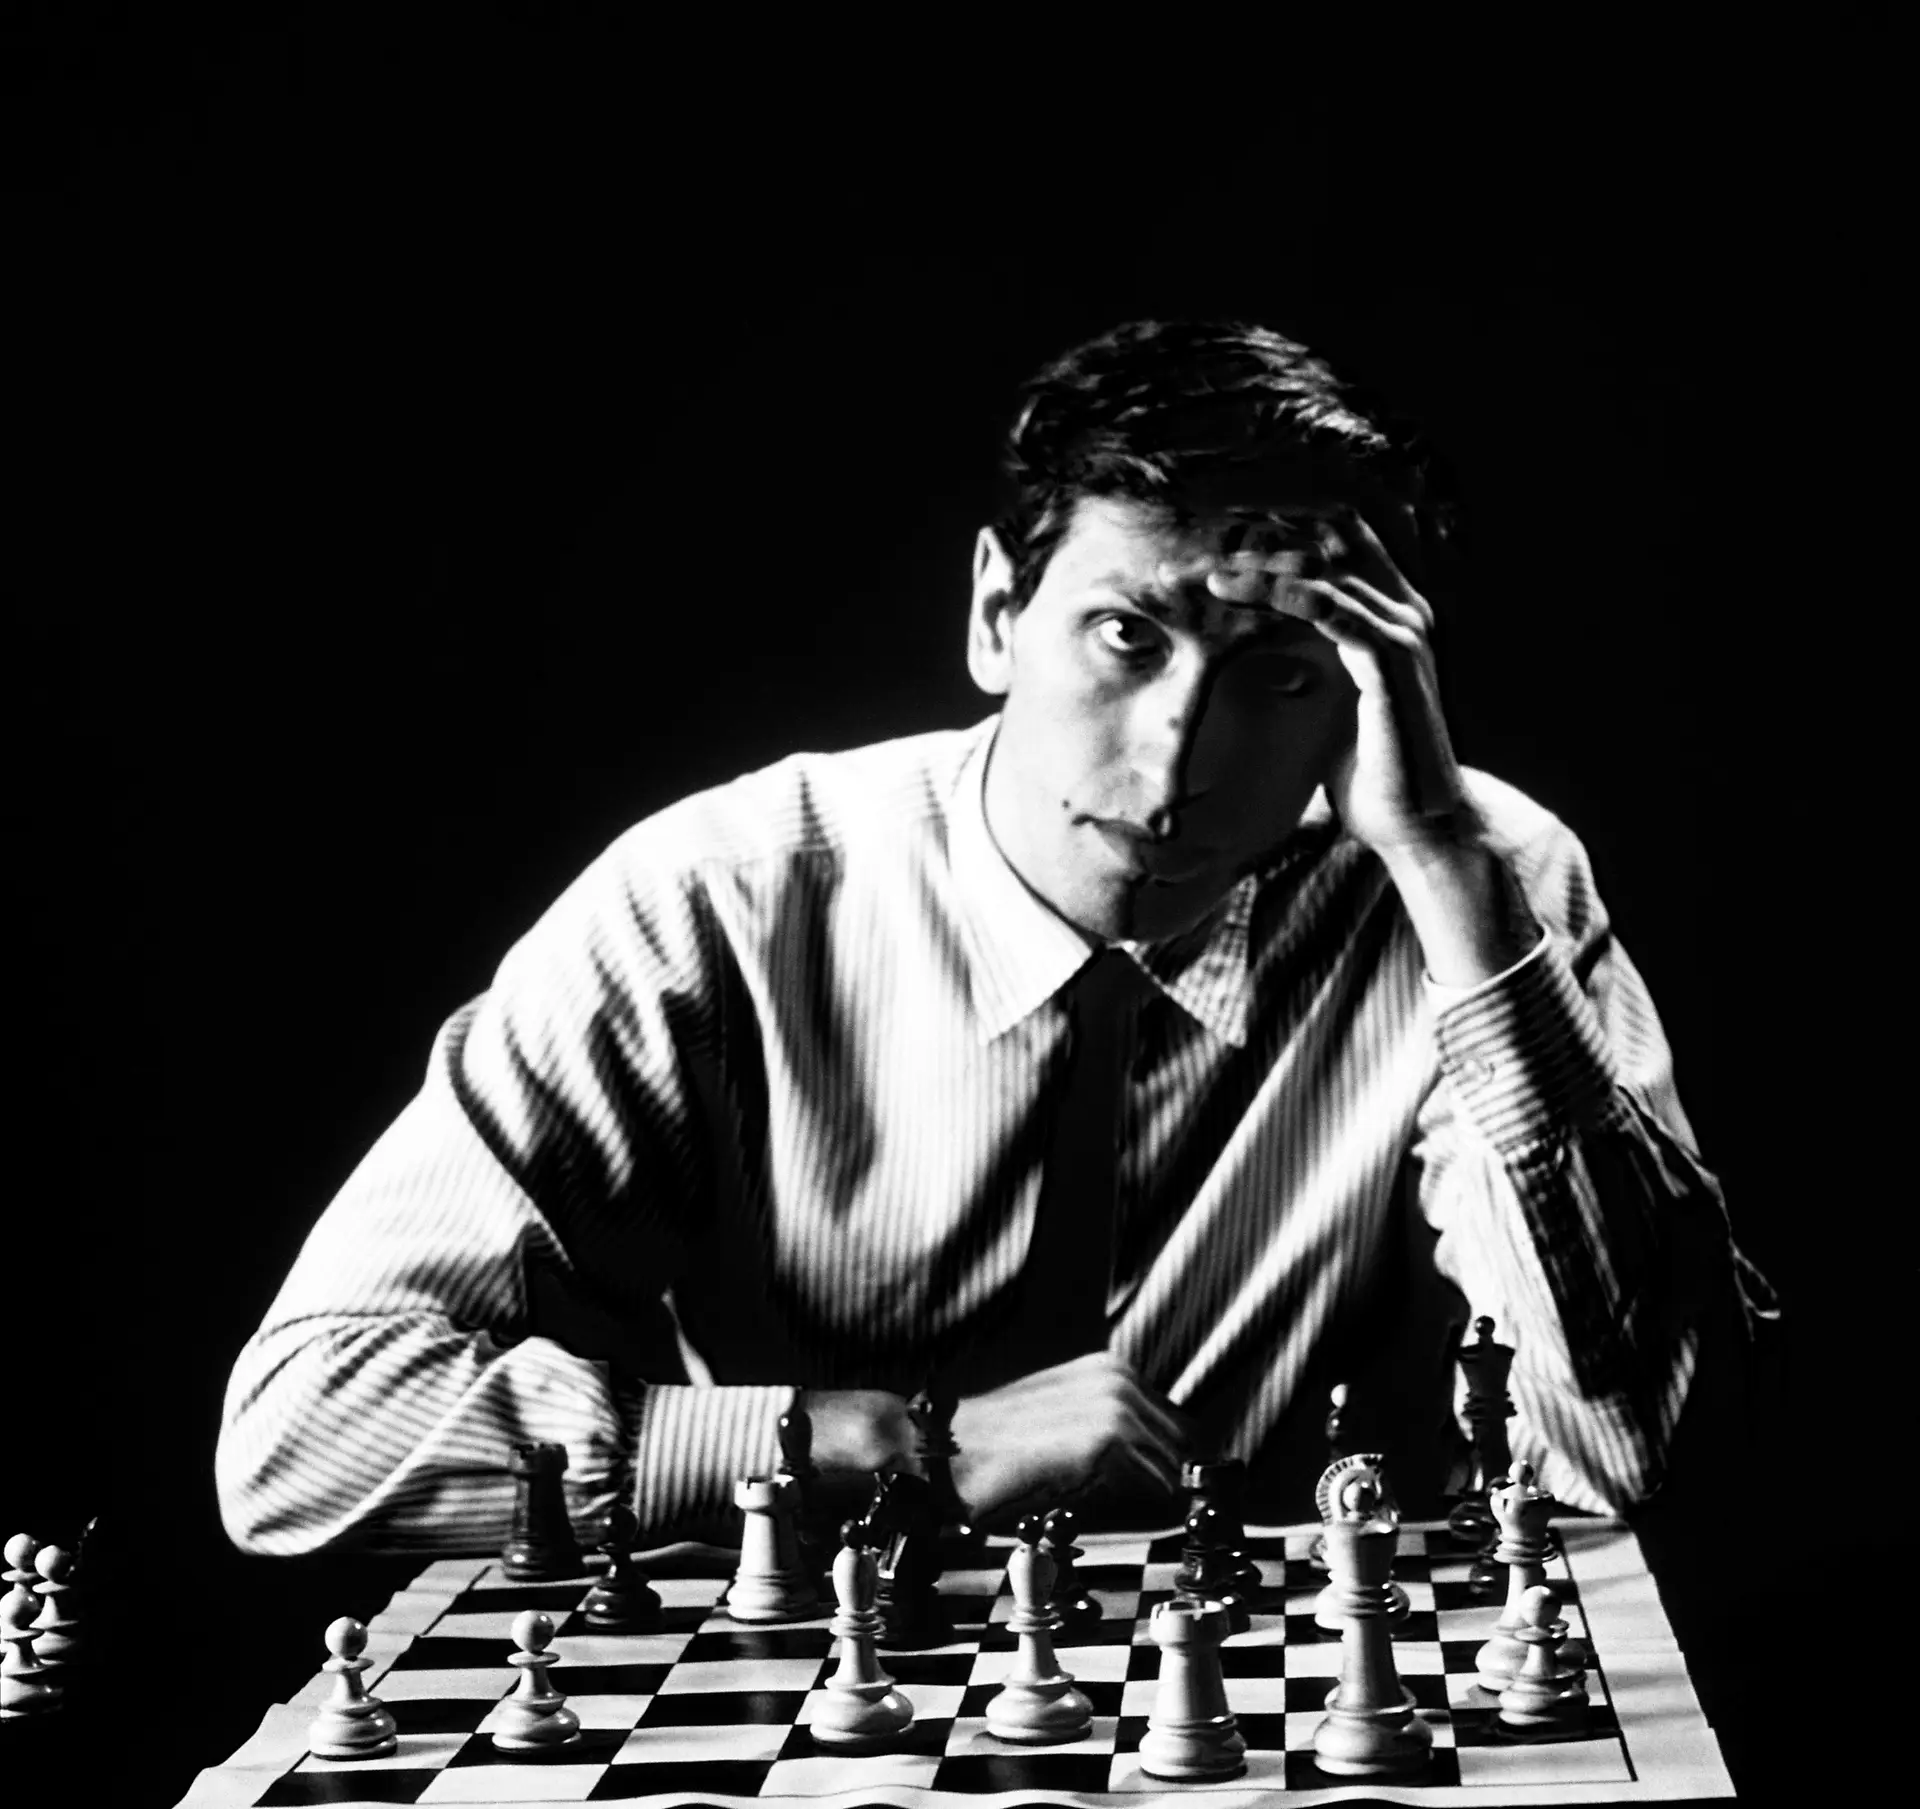 Curso de Xadrez - Melhores Partidas de Bobby Fischer - Nabylla